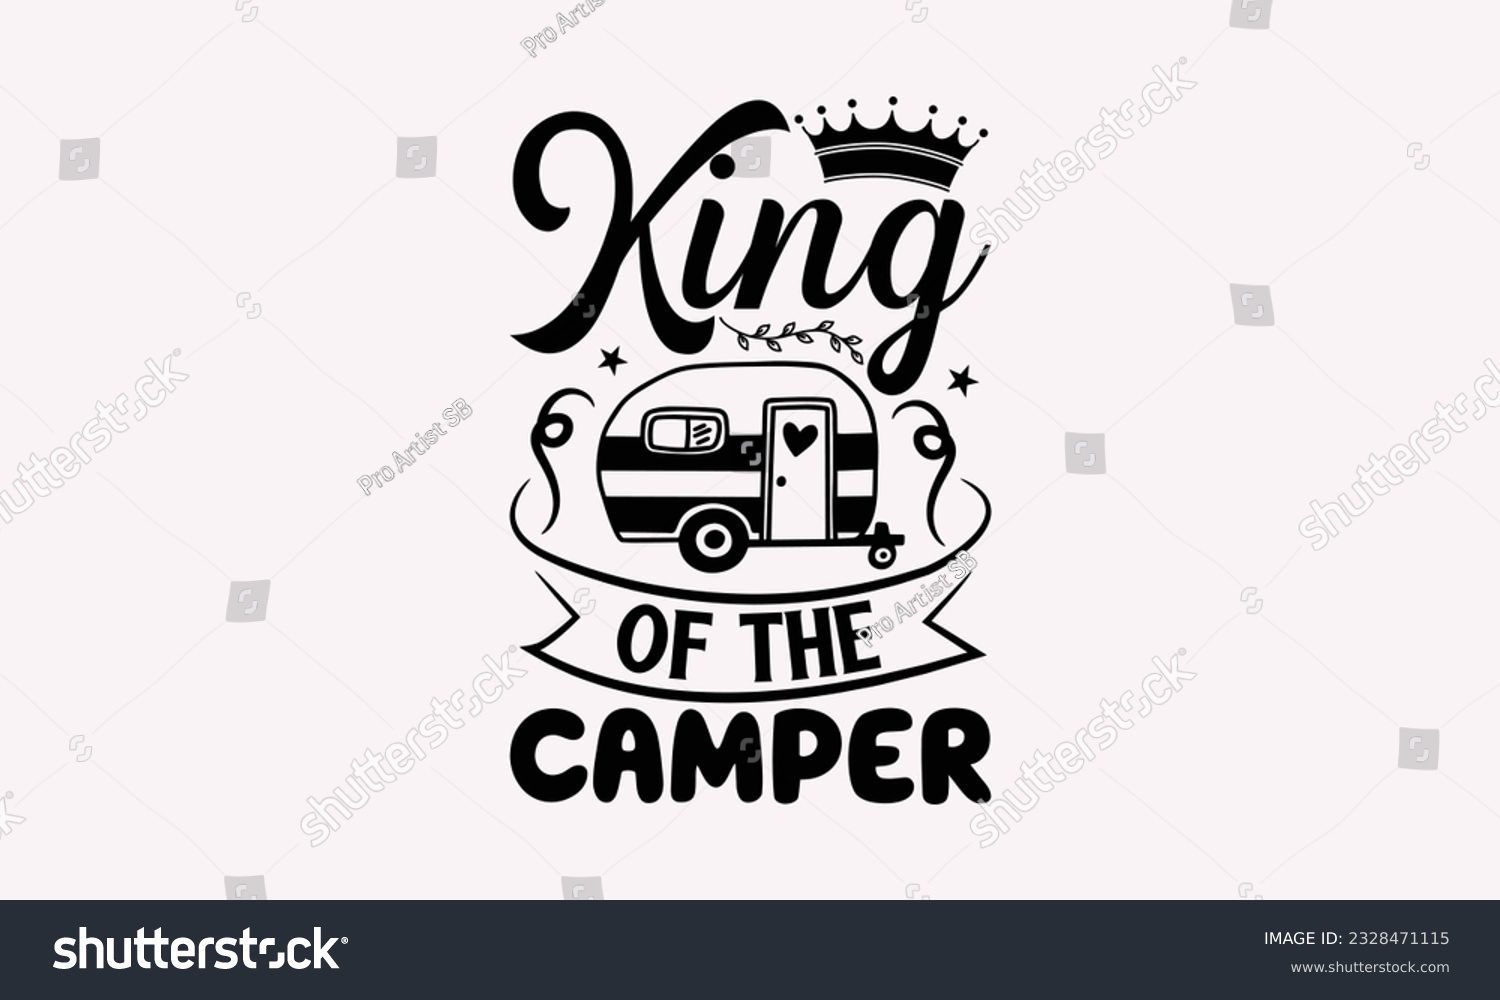 SVG of king of the camper - Camping SVG Design, Campfire T-shirt Design, Sign Making, Card Making, Scrapbooking, Vinyl Decals and Many More. svg